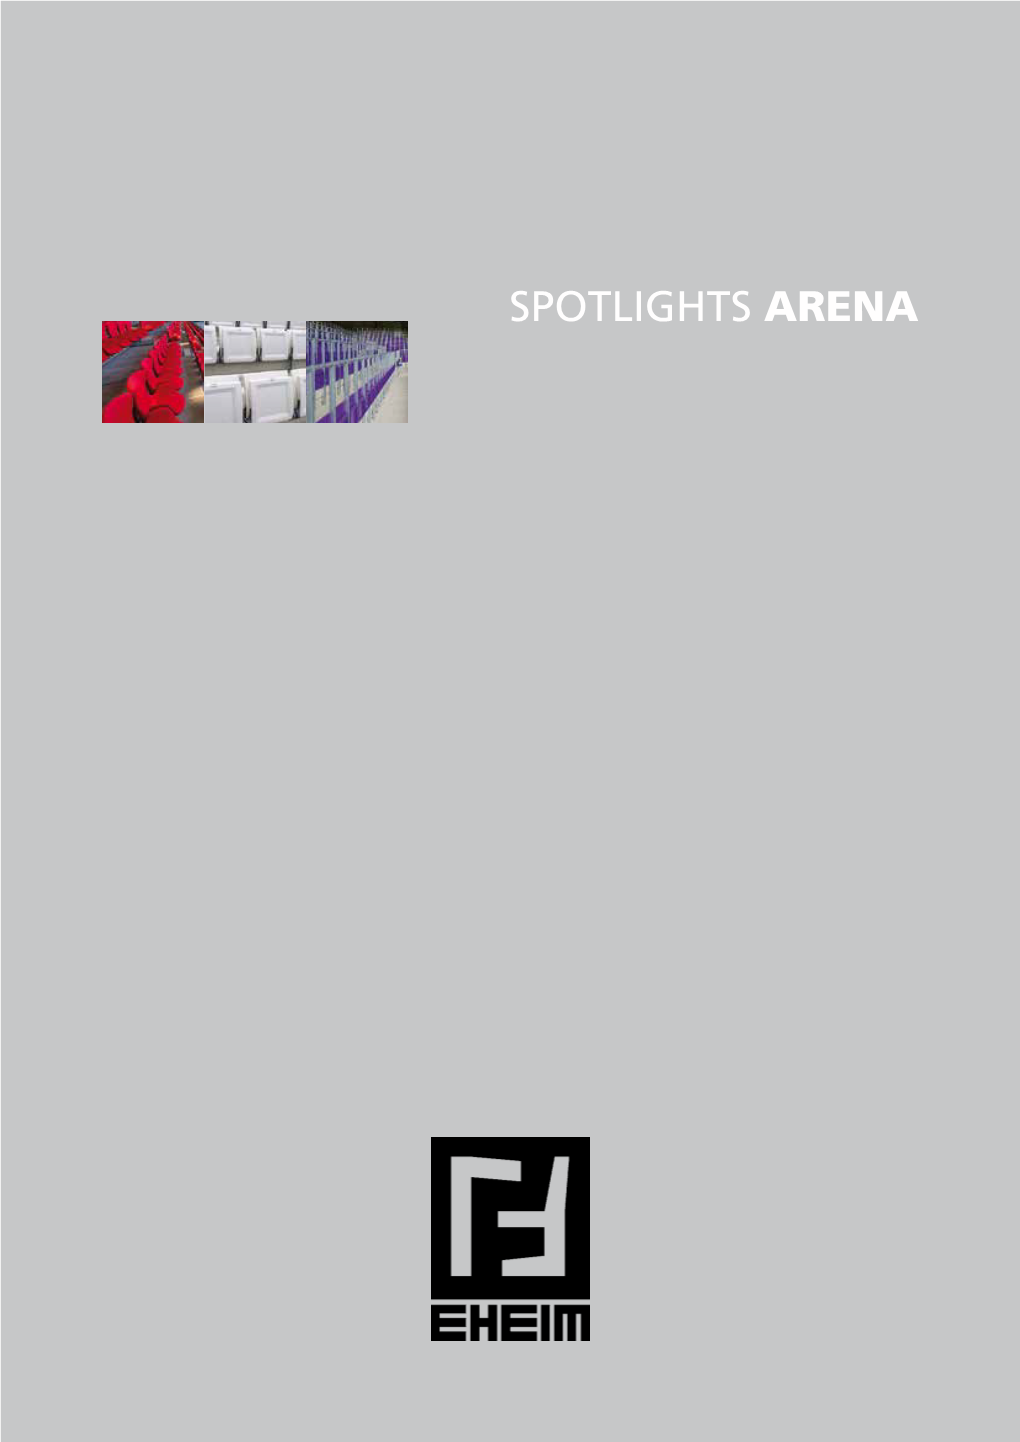 Spotlights Arena 2019